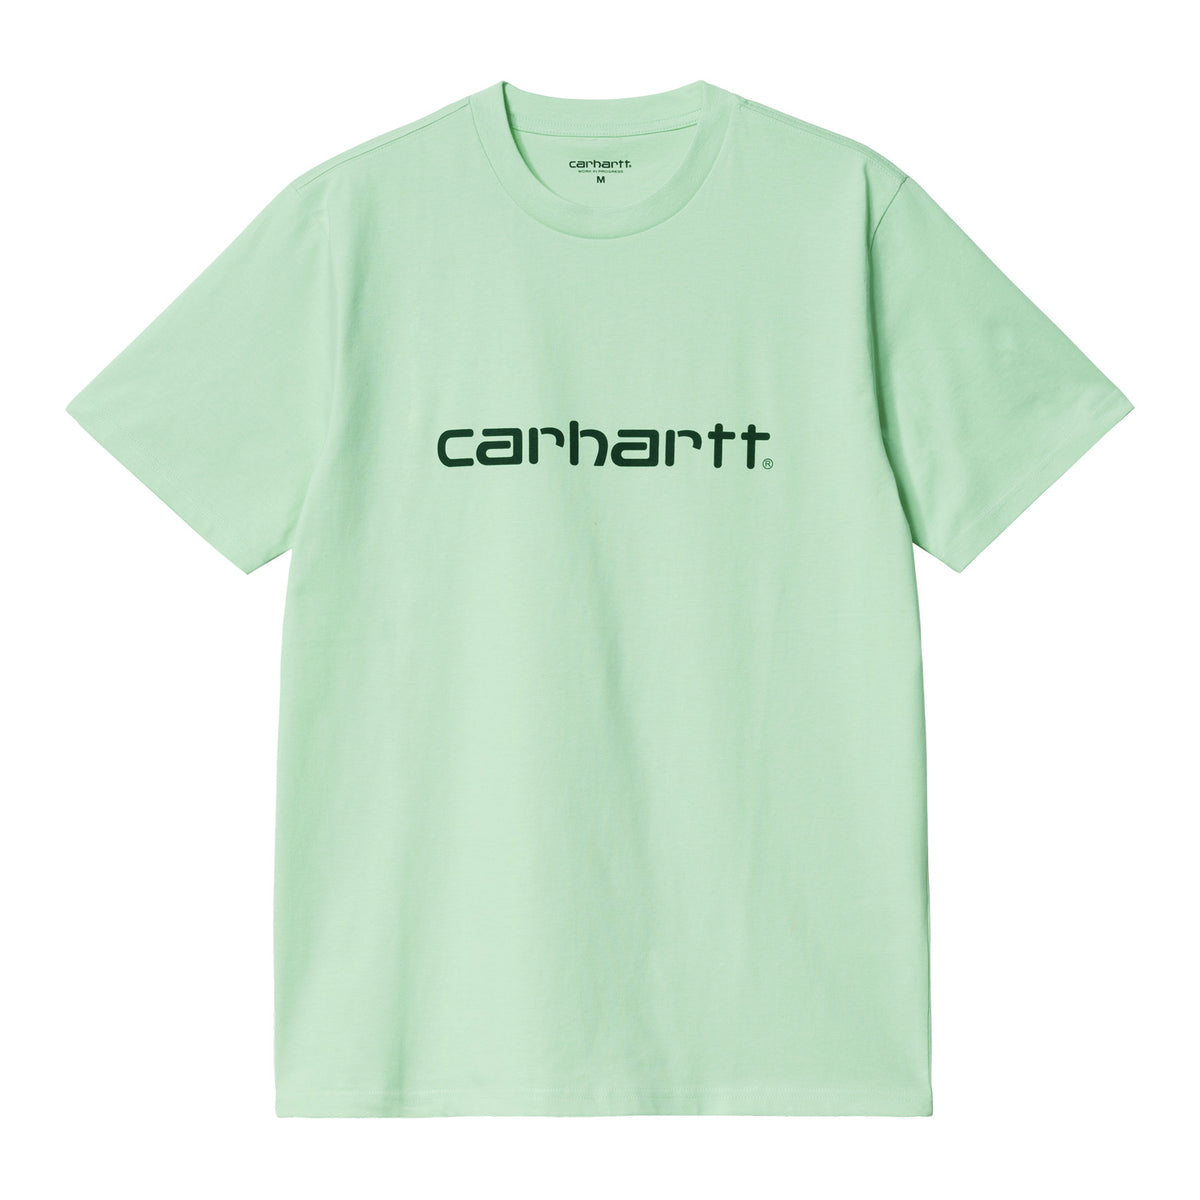 Carhartt S/S Script T-Shirt - Pale Spearmint/Hedge